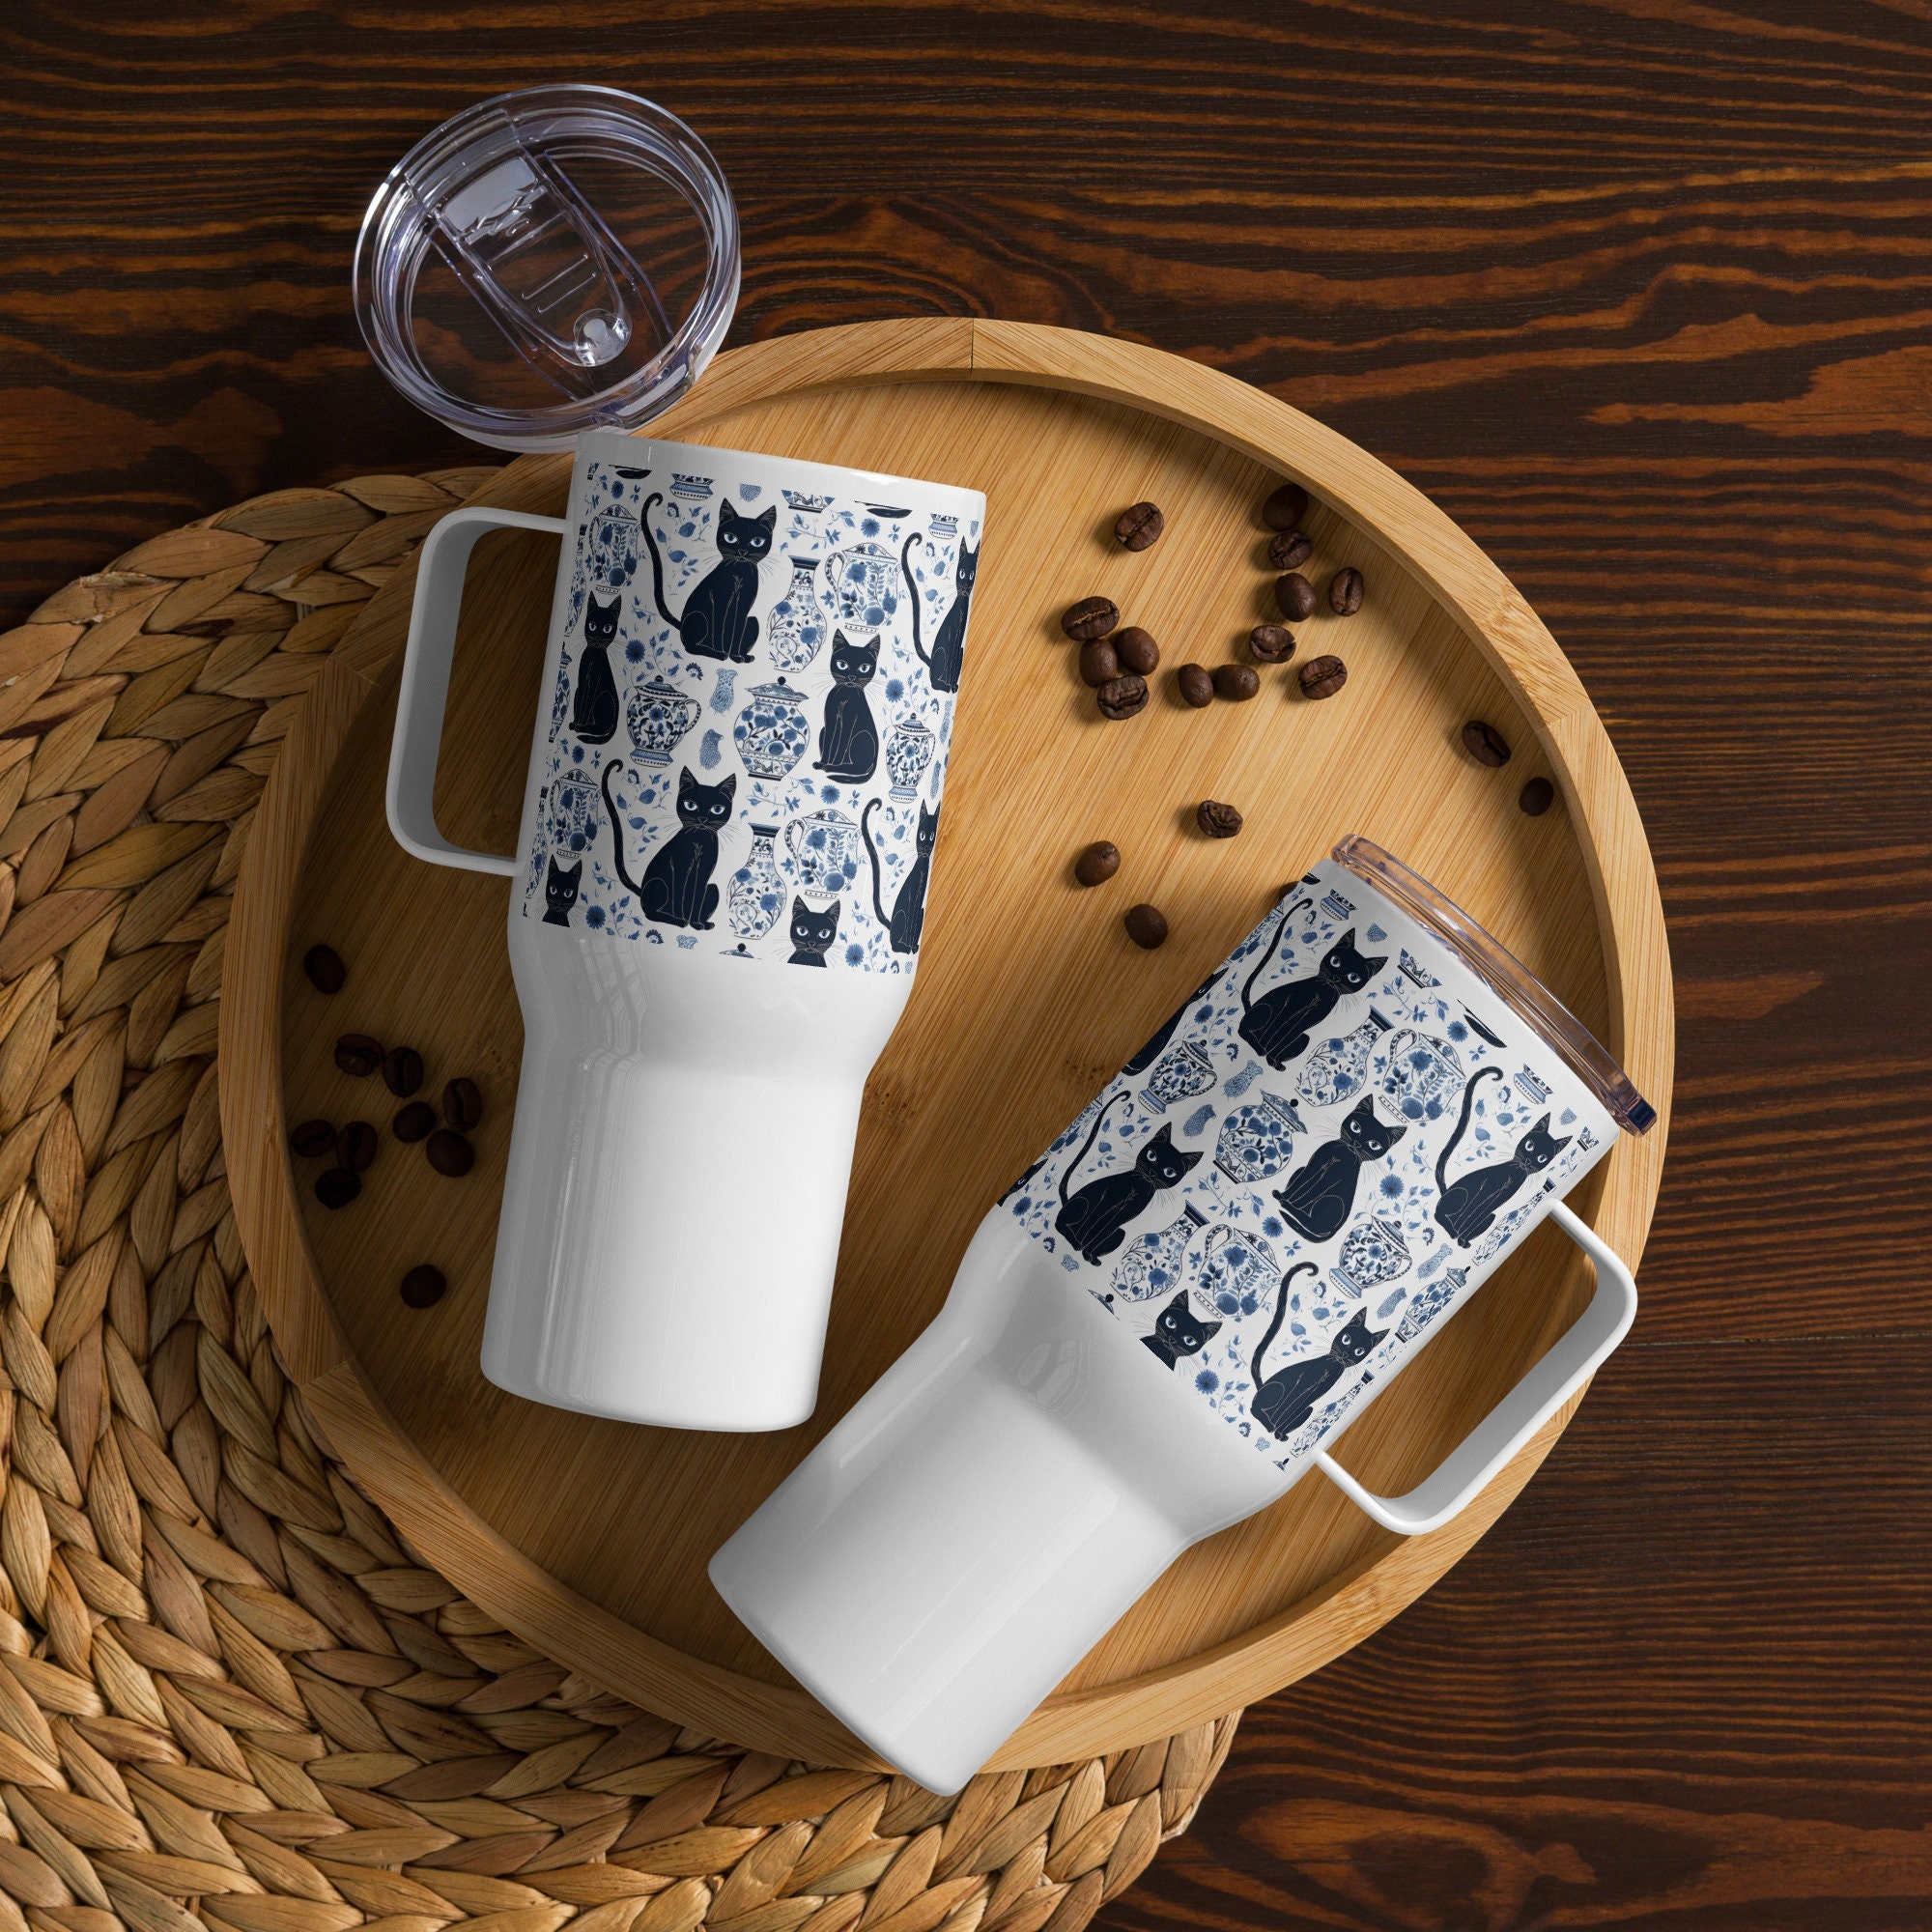 BPA free 473ml 480ml 500ml 16oz blank plain reusable plastic coffee cup  travel coffee mug hot cup hot drink cup to go